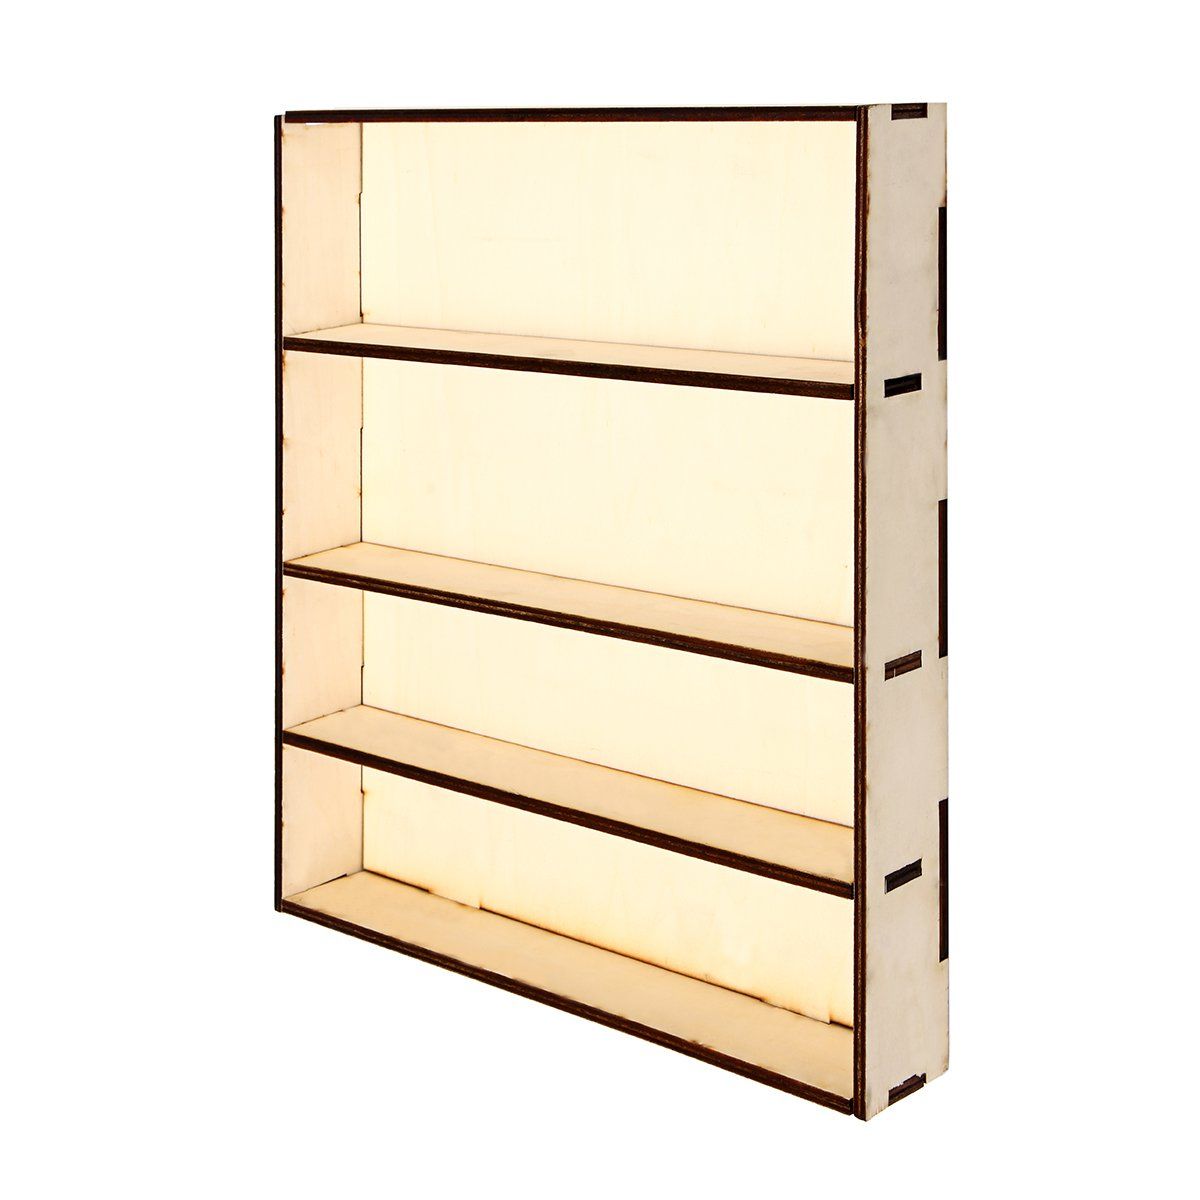 311-x-290-x-45mm-Wooden-Paint-Bottle-Rack-Model-Organizer-Acrylics-Paint-Storage-Stand-Holder-Box-1328931